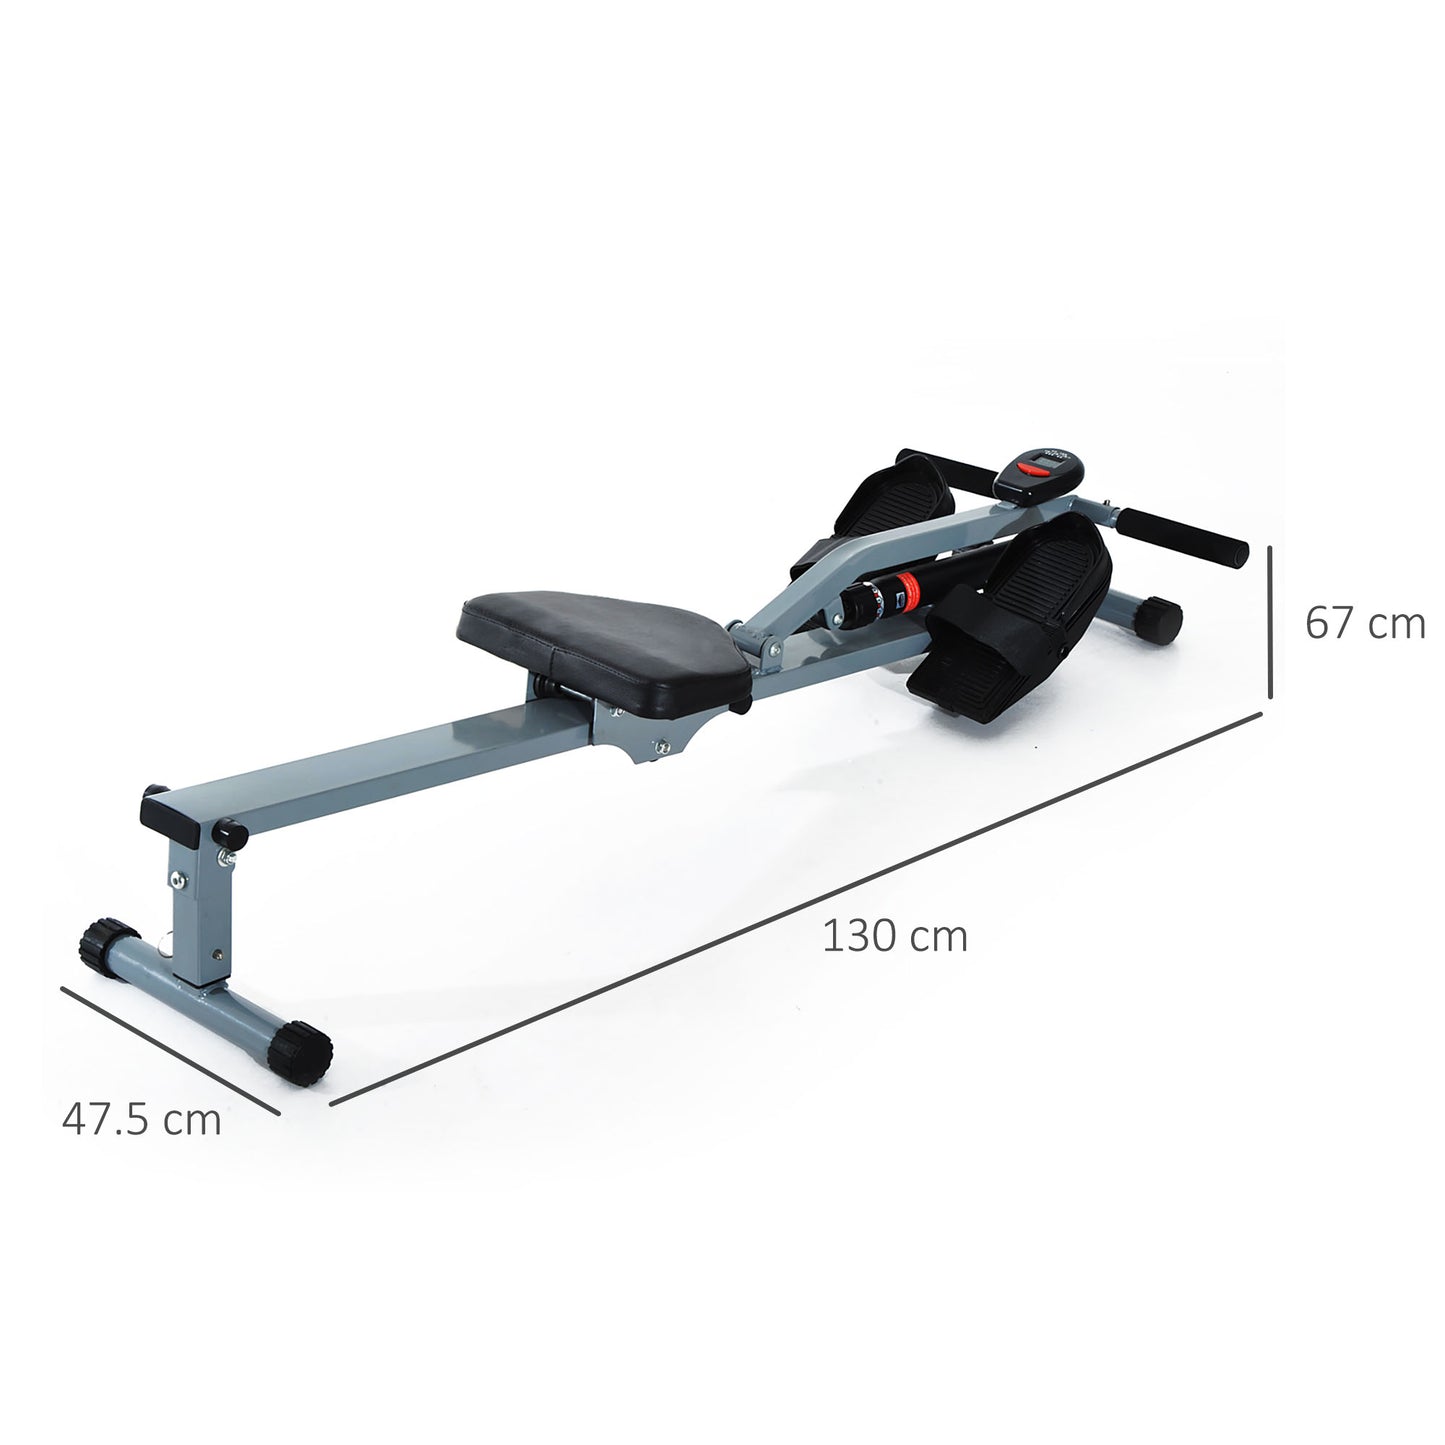 HOMCOM Rowing Machine Rower Workout Trainer W/ Monitor-Grey/Black